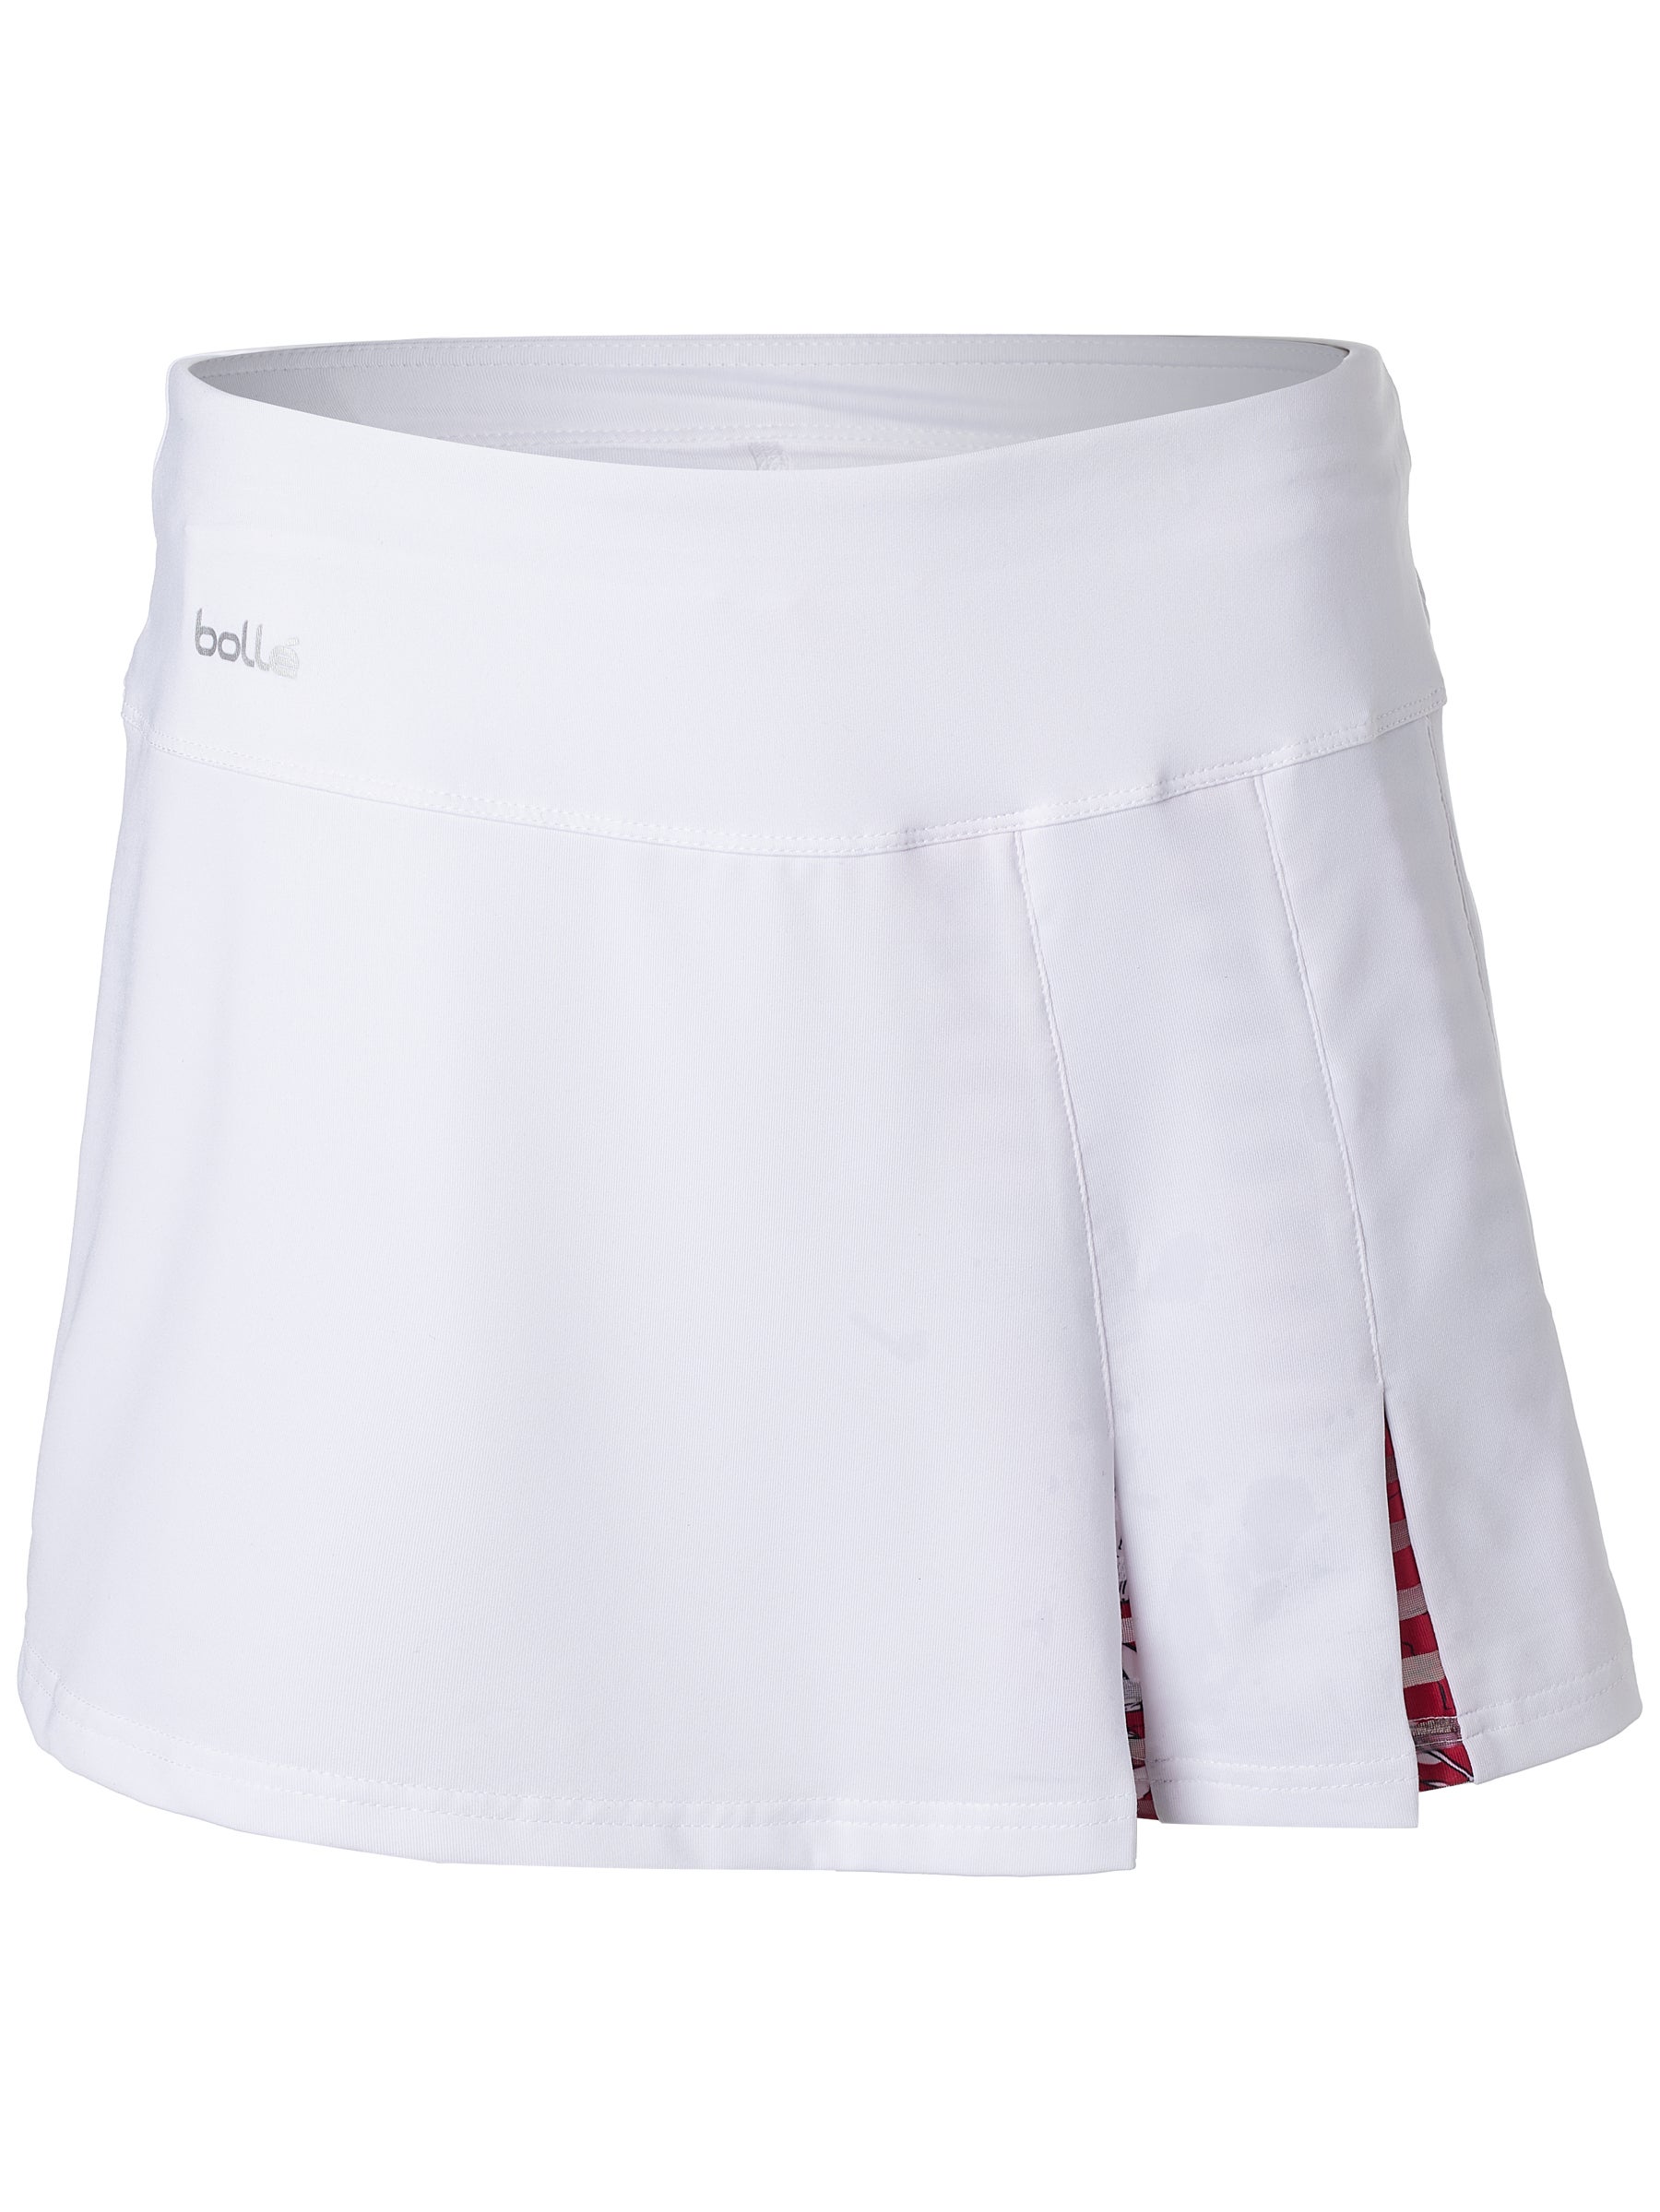 Bollé Painters Palette Printed Tennis Skirt with Shorts Dynamic Design Enterprise Inc dba bolle' PP-8675-P